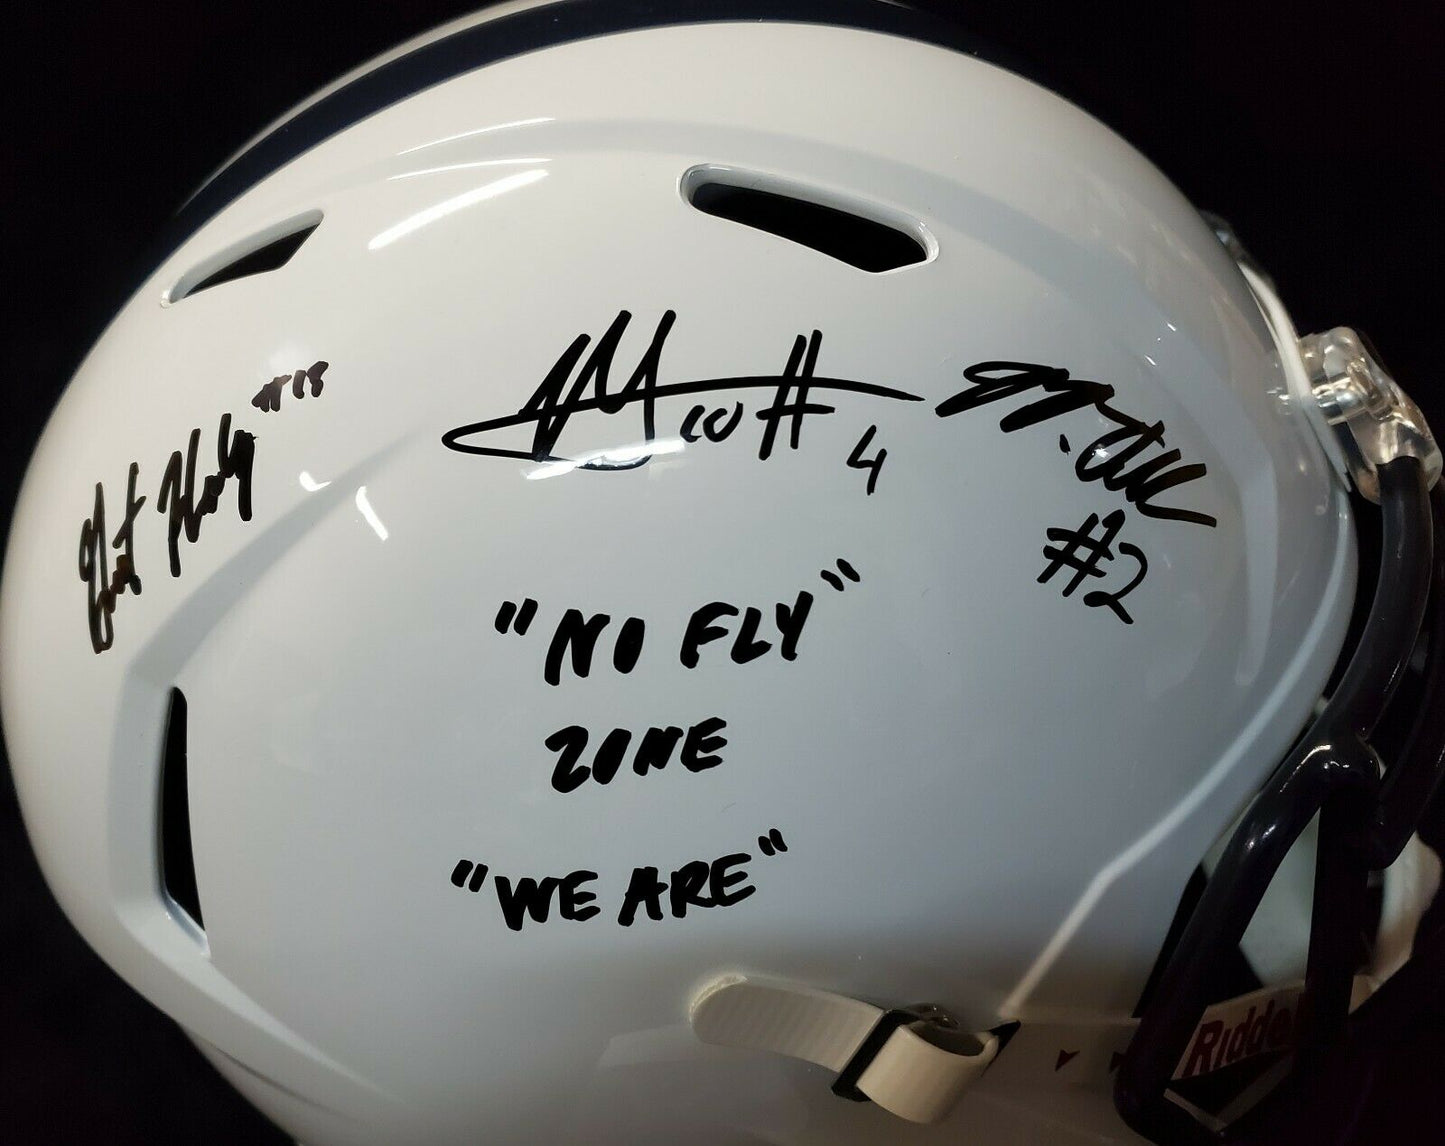 MVP Authentics Penn St 3X Signed Full Size Helmet - Marcus Allen / Grant Haley / Nick Scott Jsa 360 sports jersey framing , jersey framing